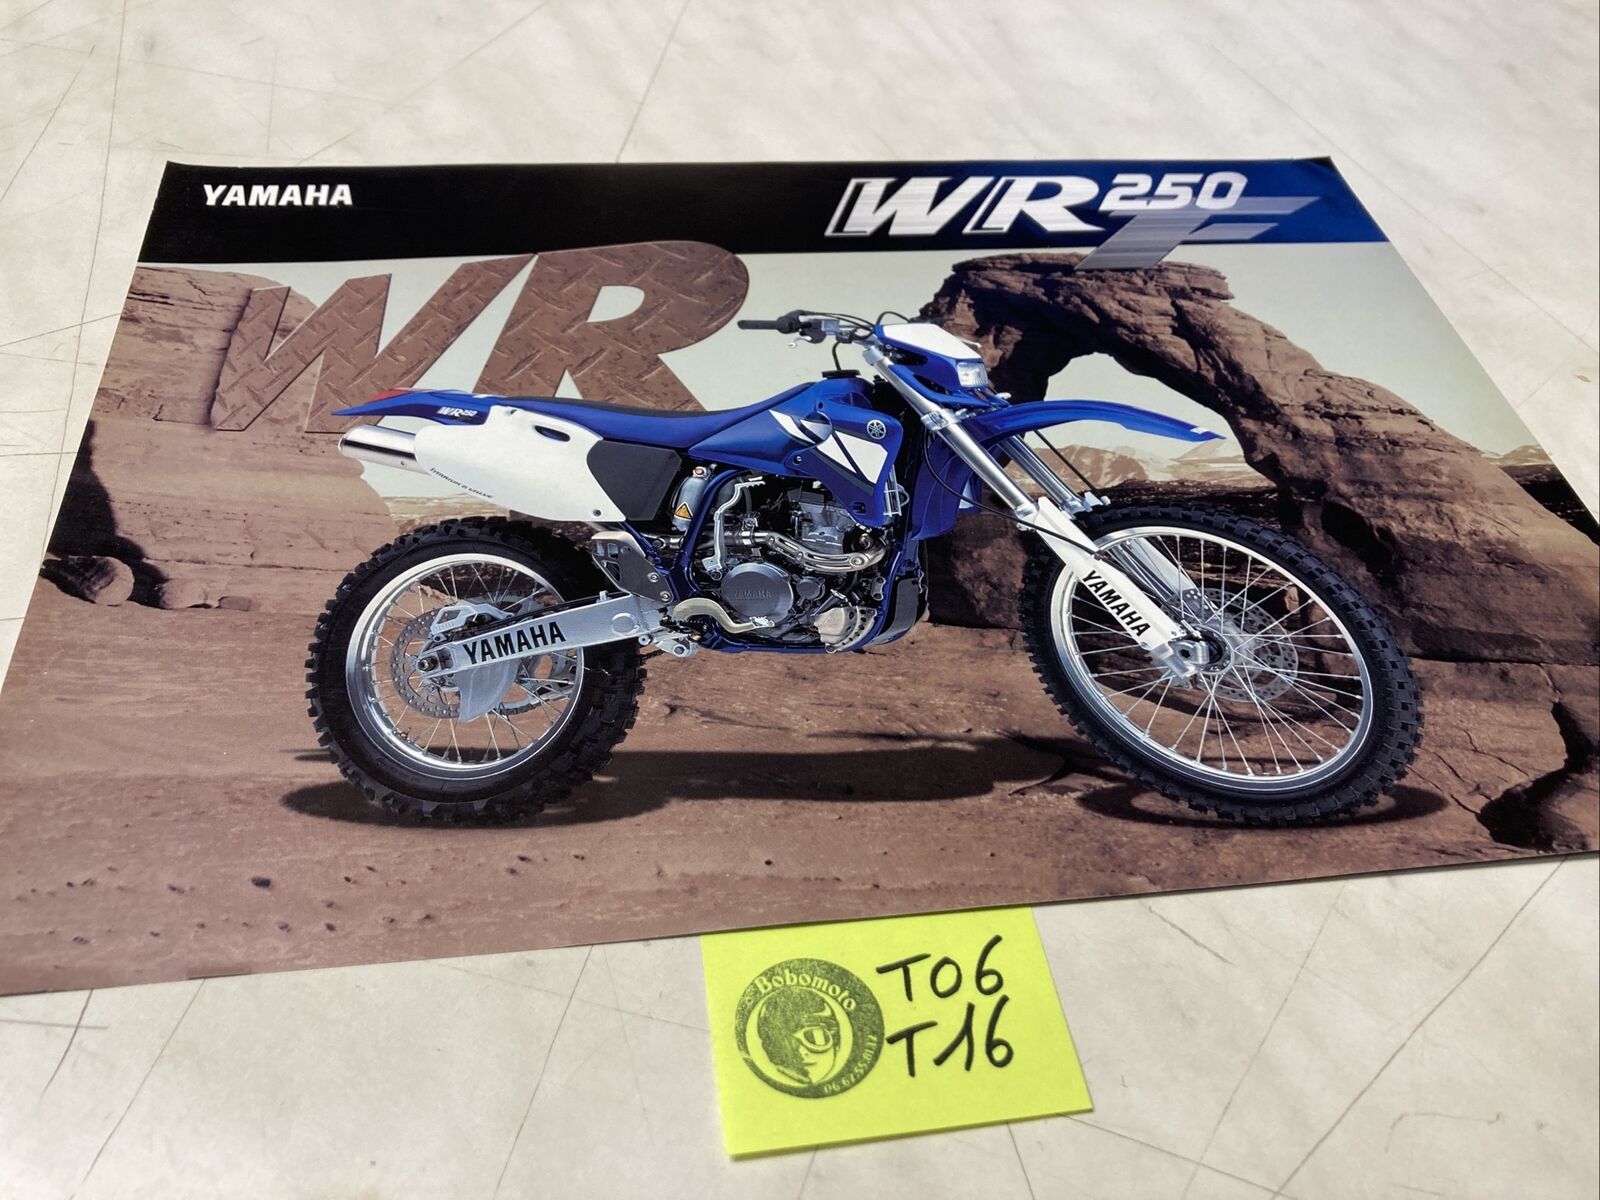 Yamaha WR250F Wrf 250 Booklet - Sale Catalogue Leaflet Advertising